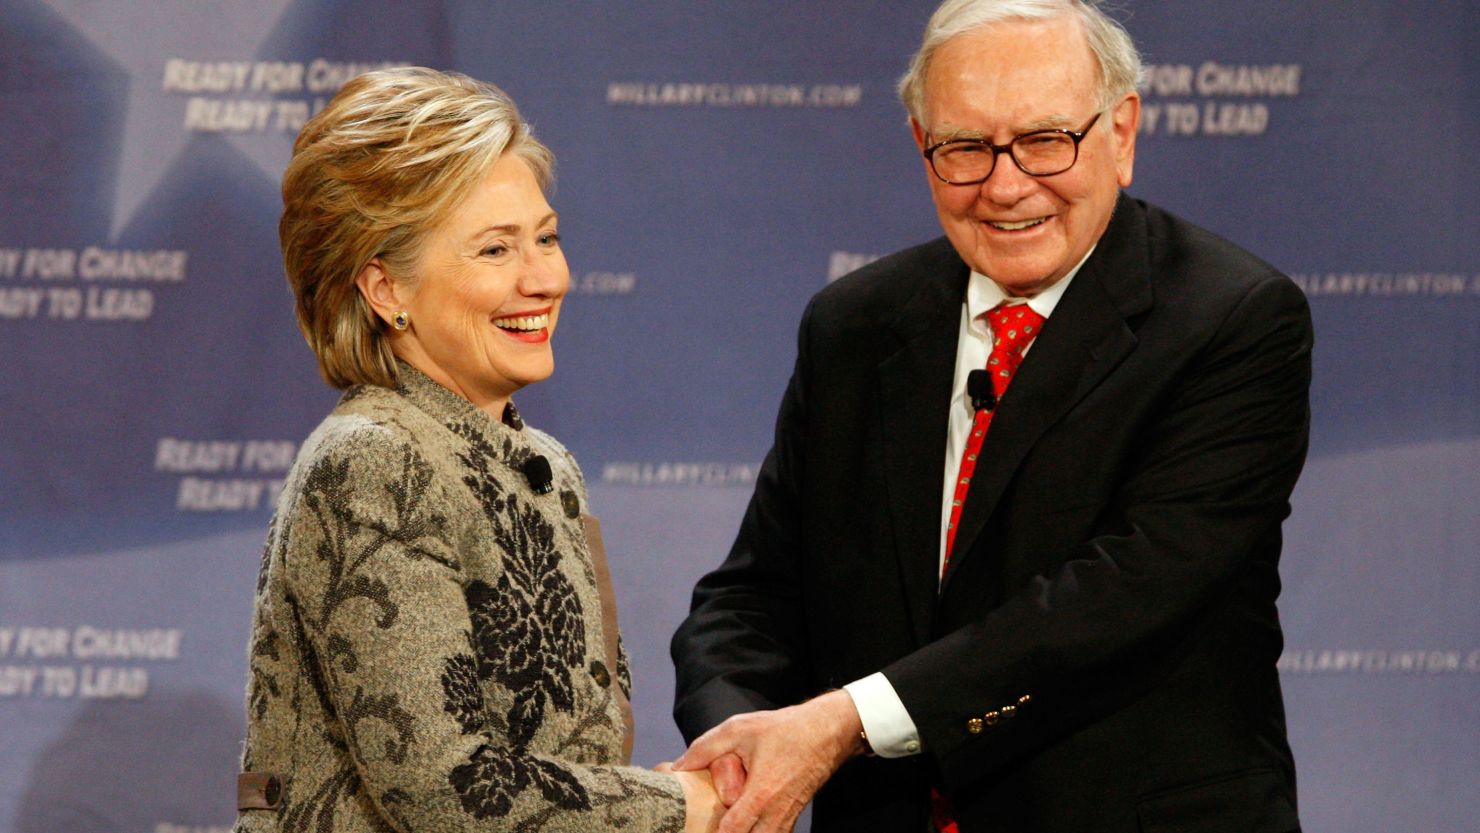 Warren Buffett donated $25,000 to a pro-Hillary Clinton political group